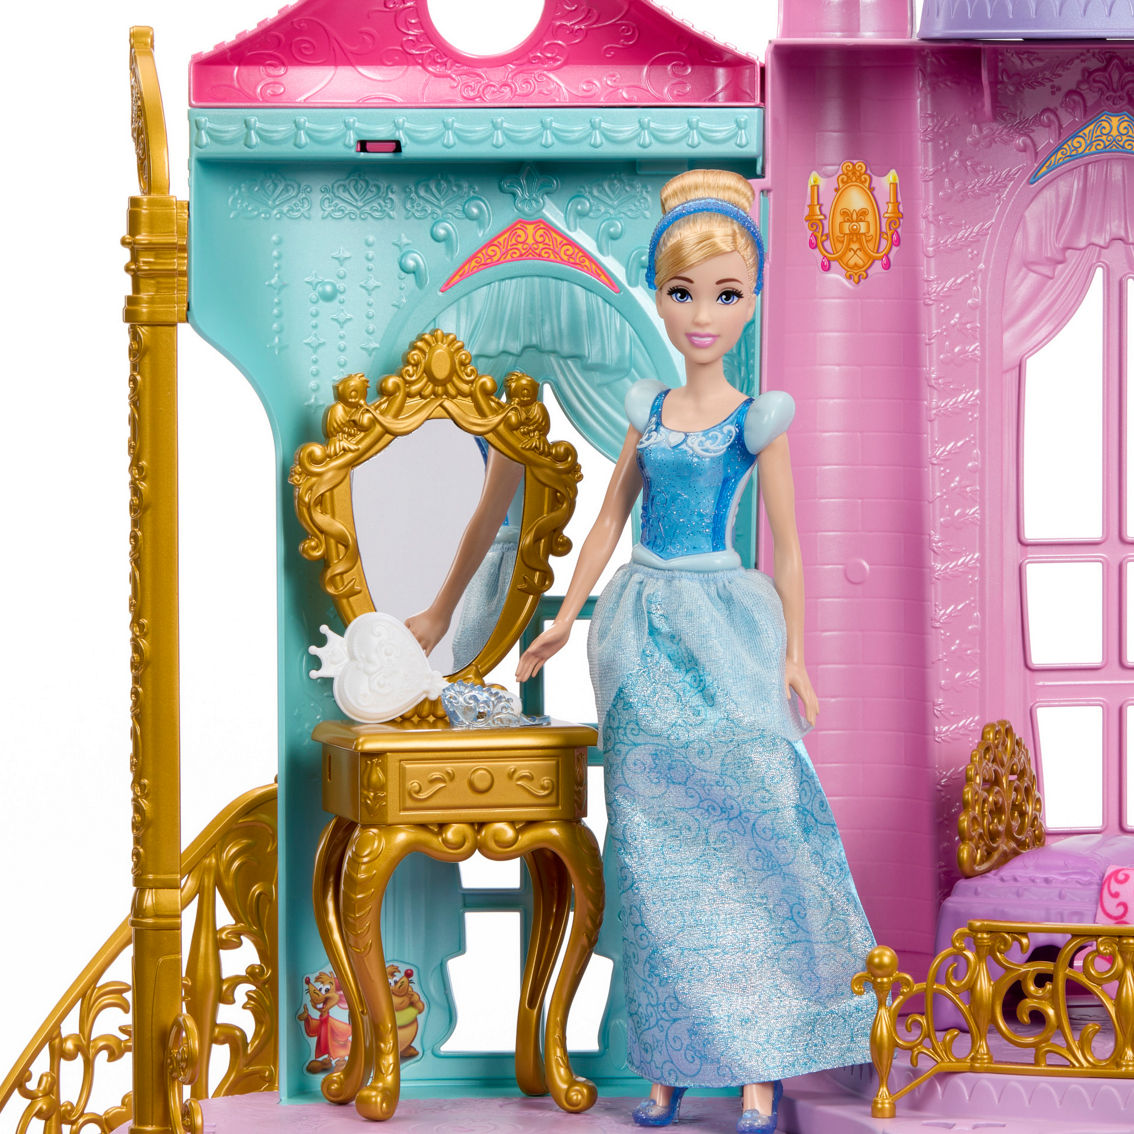 Disney Princess Royal Adventures Castle Dollhouse - Image 5 of 8